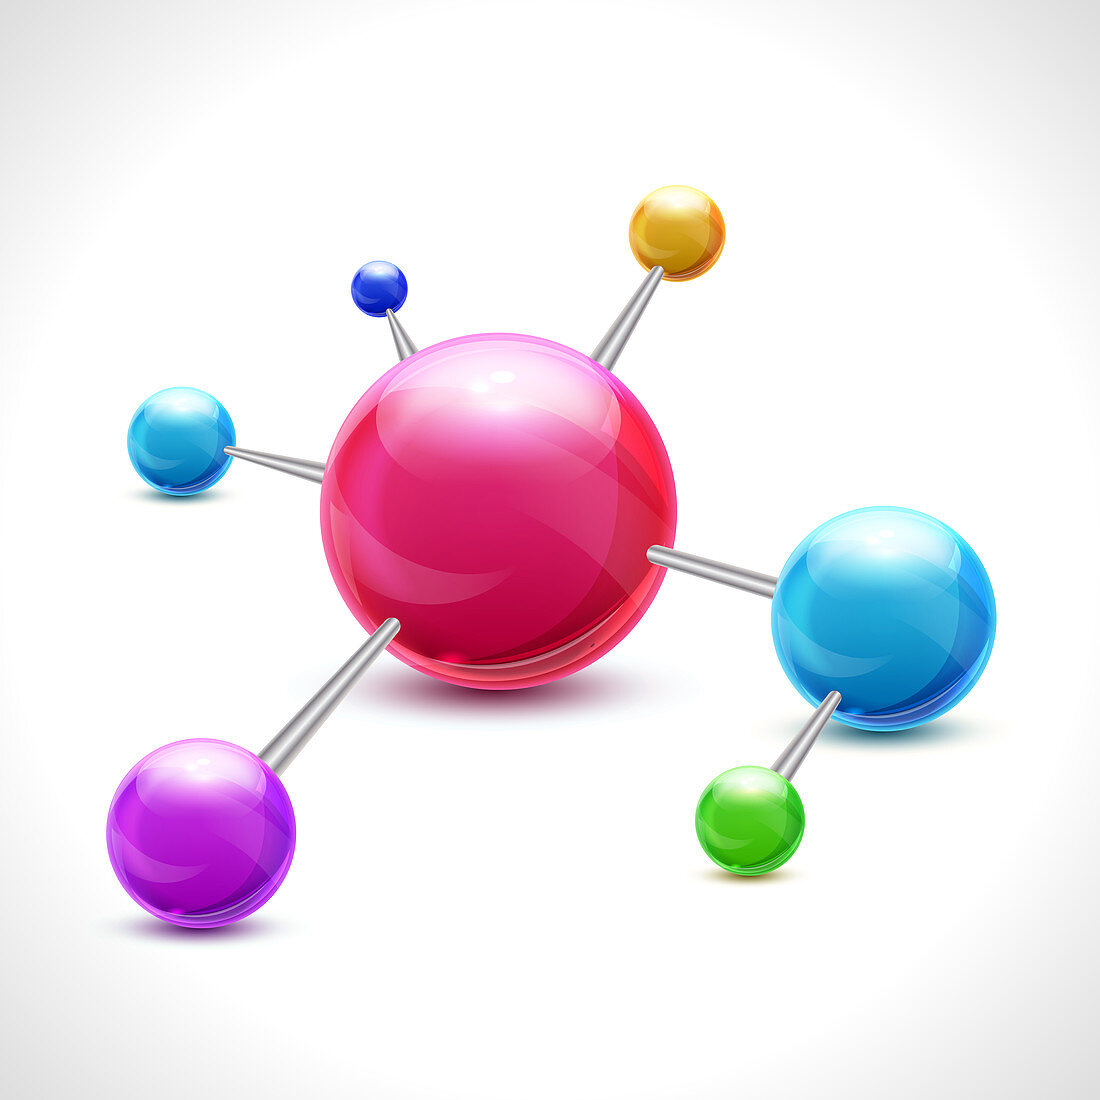 Molecular structure, illustration